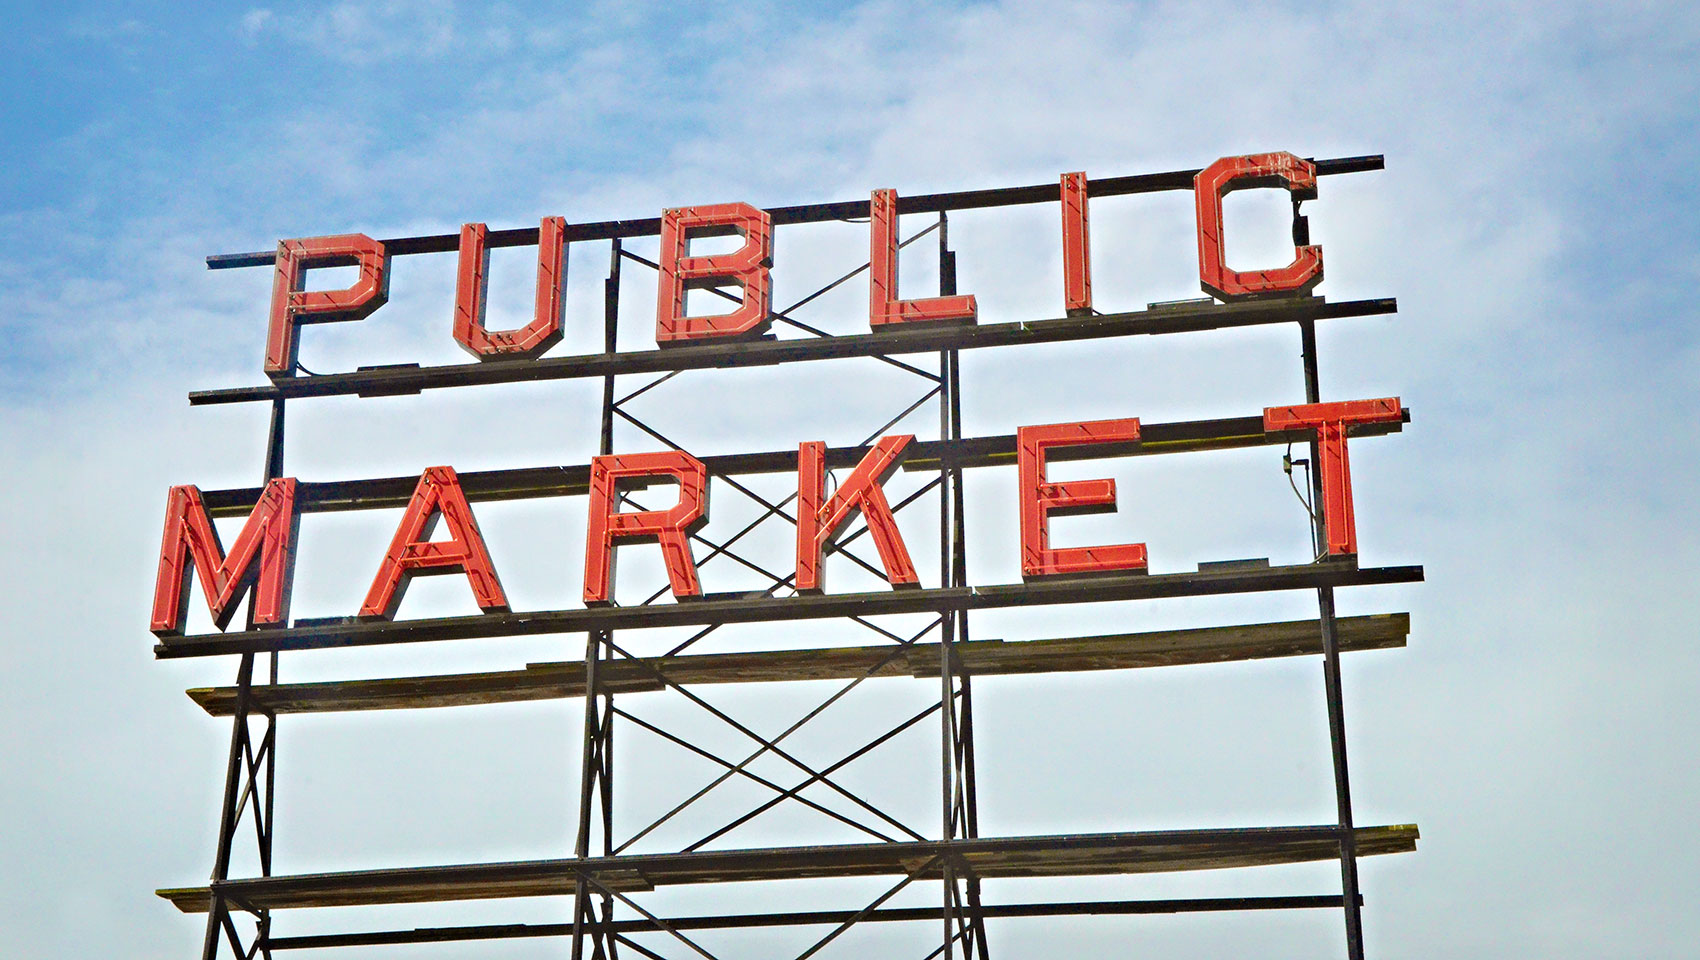 seattle pike place public market